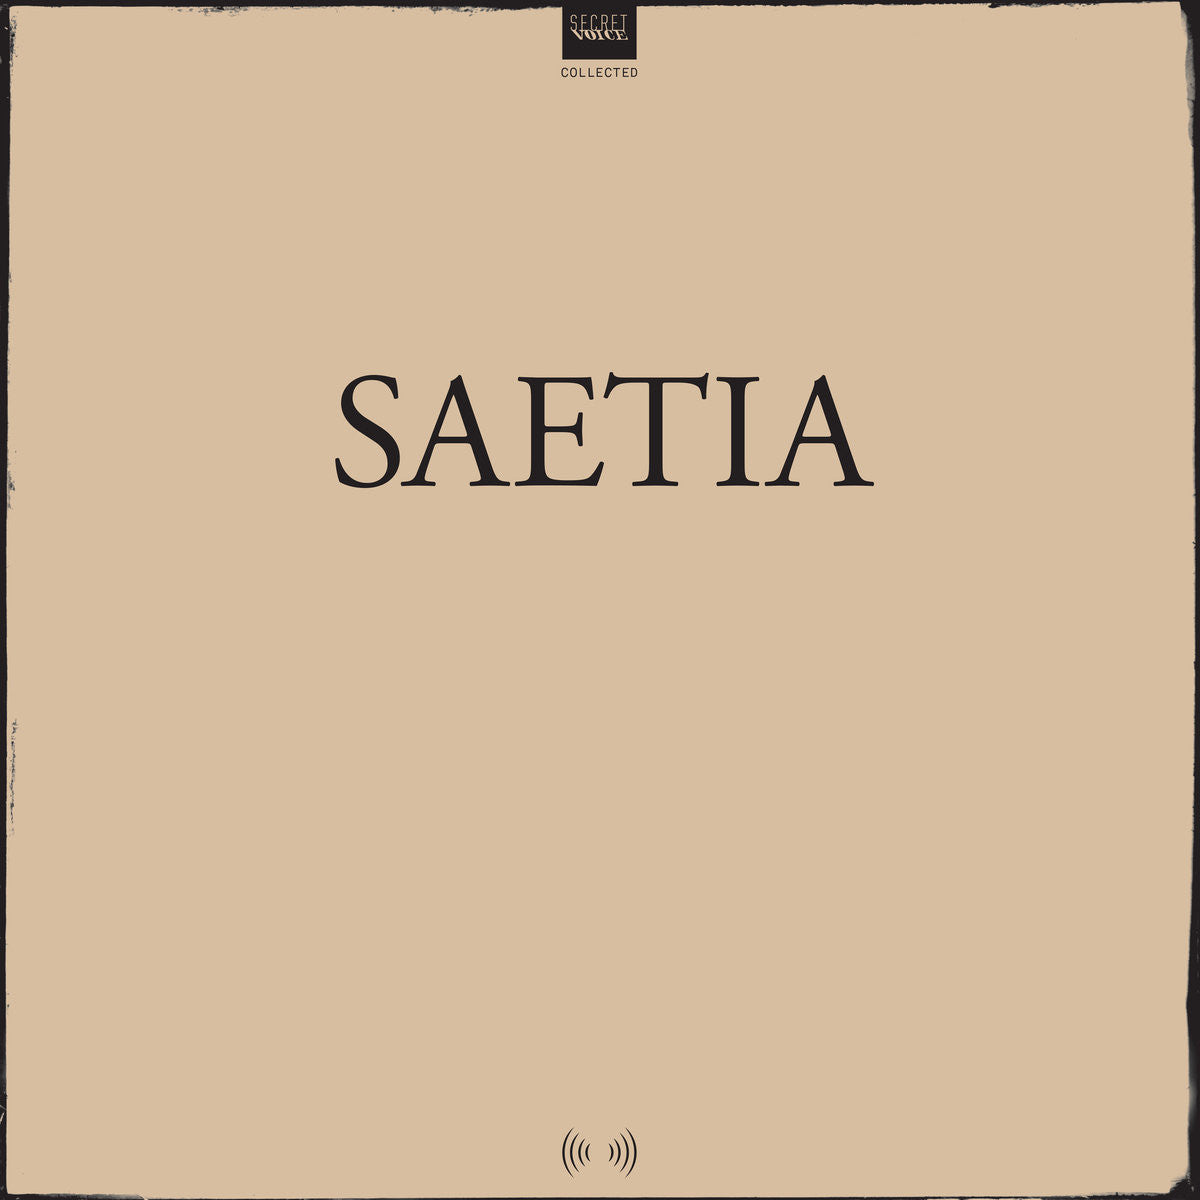 Saetia - Collected - New Vinyl Record 2016 Secret Voice Deluxe 2-LP 180gram Gatefold featuring their LP, 7", and Cassette Demo Material! - Screamo / Hardcore / PROTO SKRAMZZZ ffo PG. 99, Orchid, Jerome's Dream etc